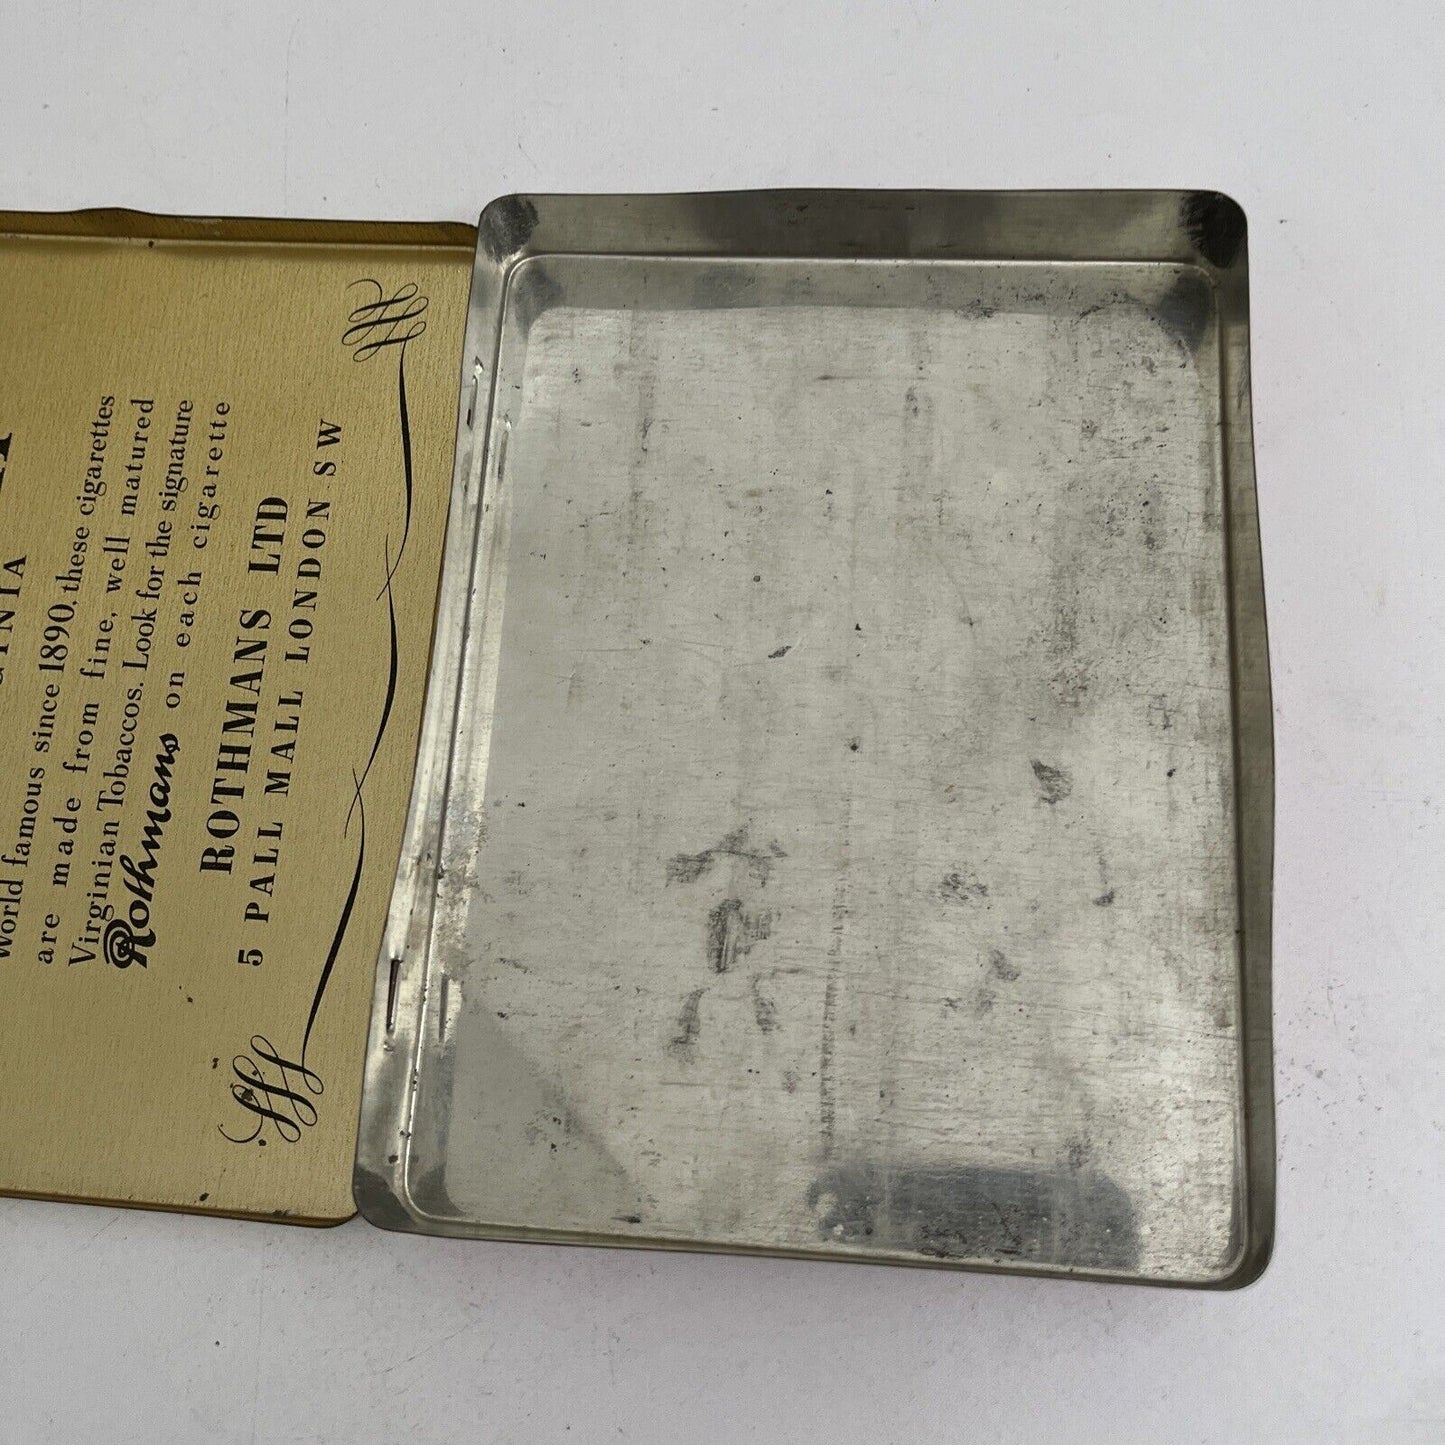 Vintage Rothmans Pall Mall Virginia Medium Cigarette Tin Made In England